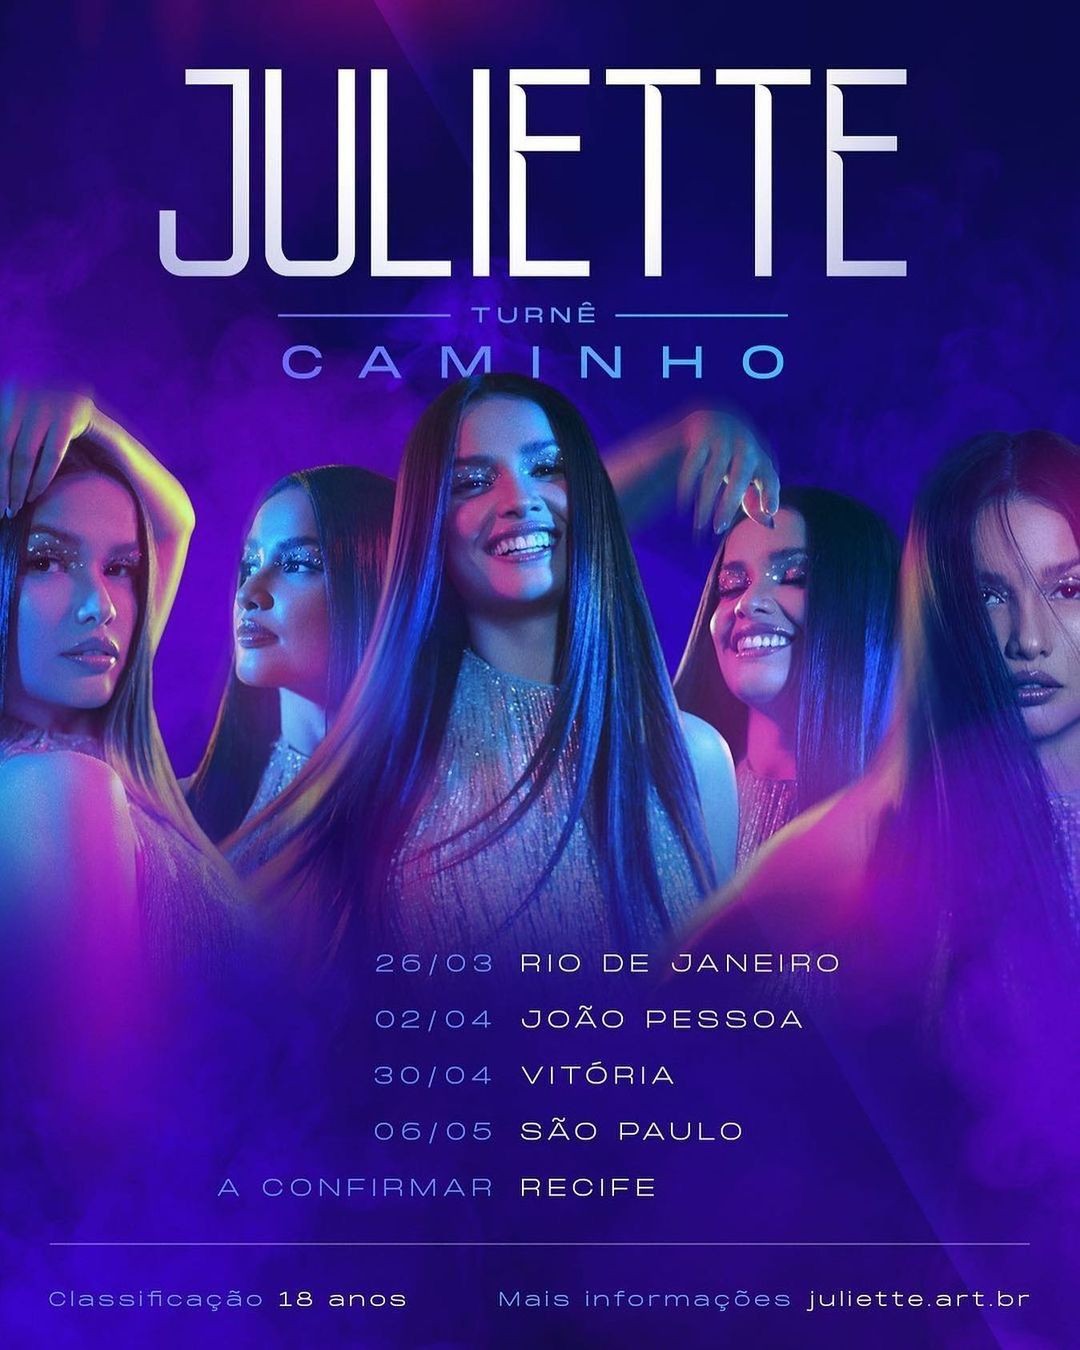 Juliette anuncia turnê (Foto: Reprodução/Instagram)